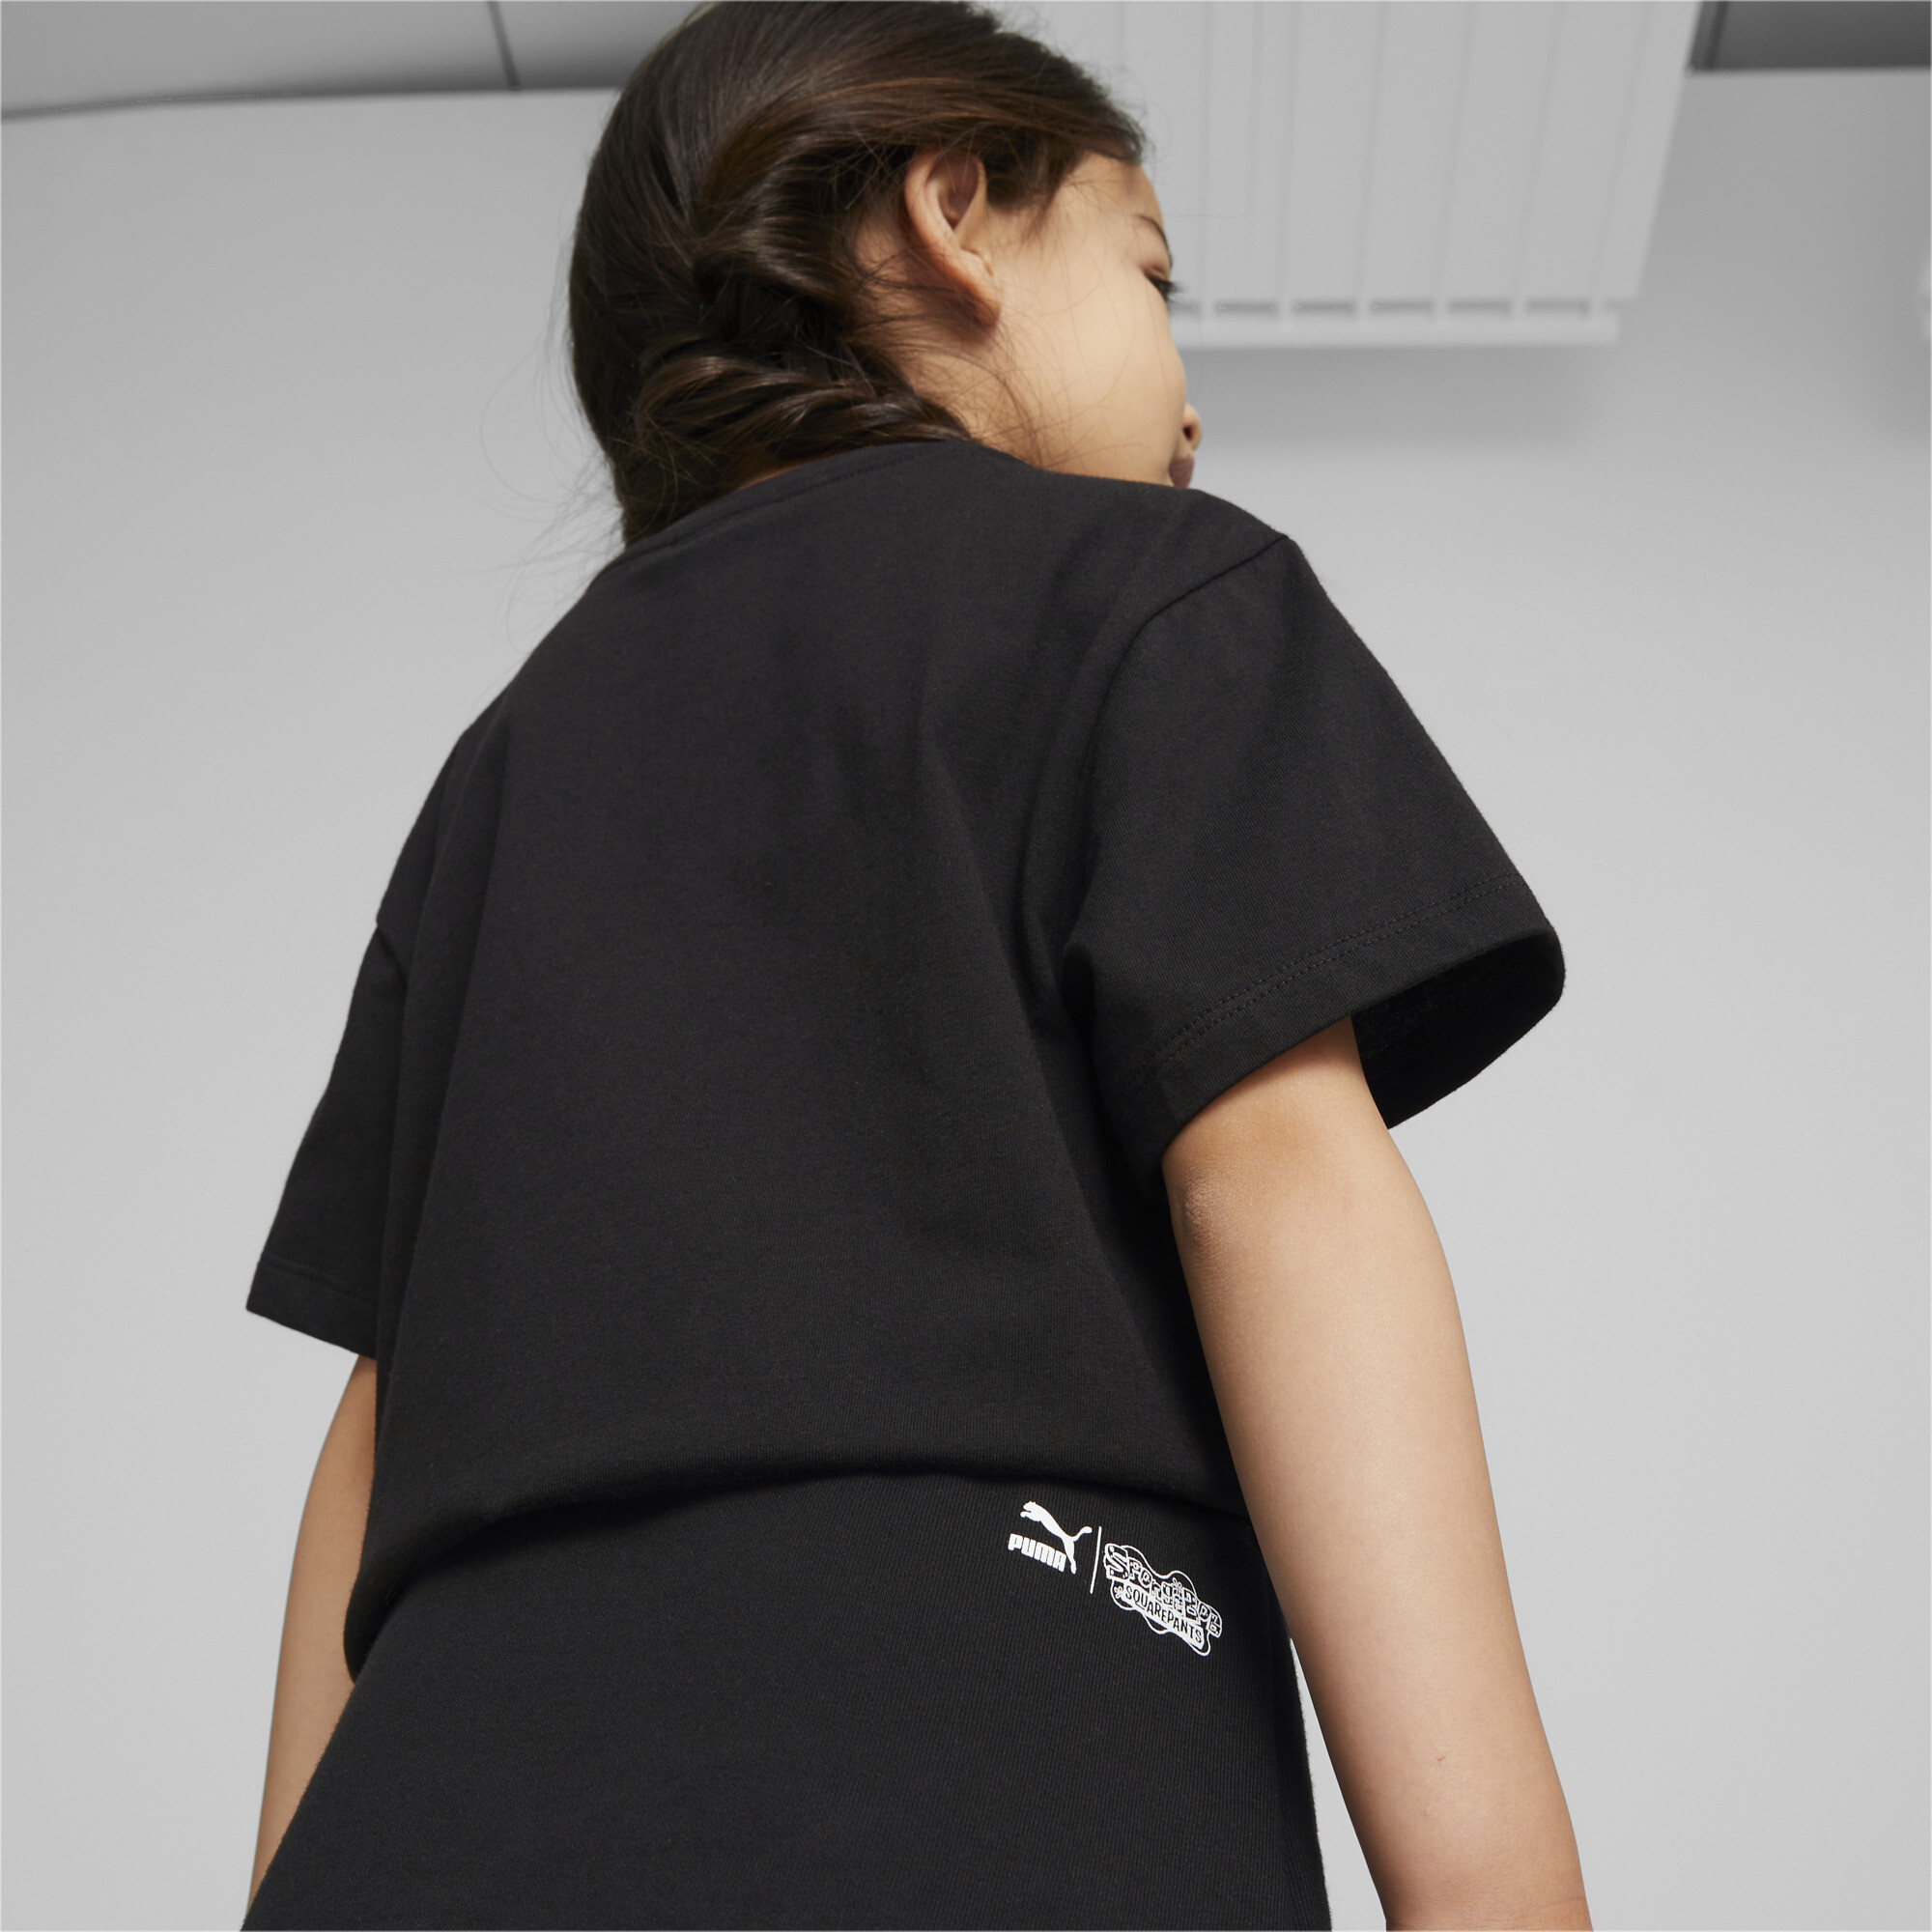 PUMA X SPONGEBOB Skirt Kids In Black, Size 4-5 Youth